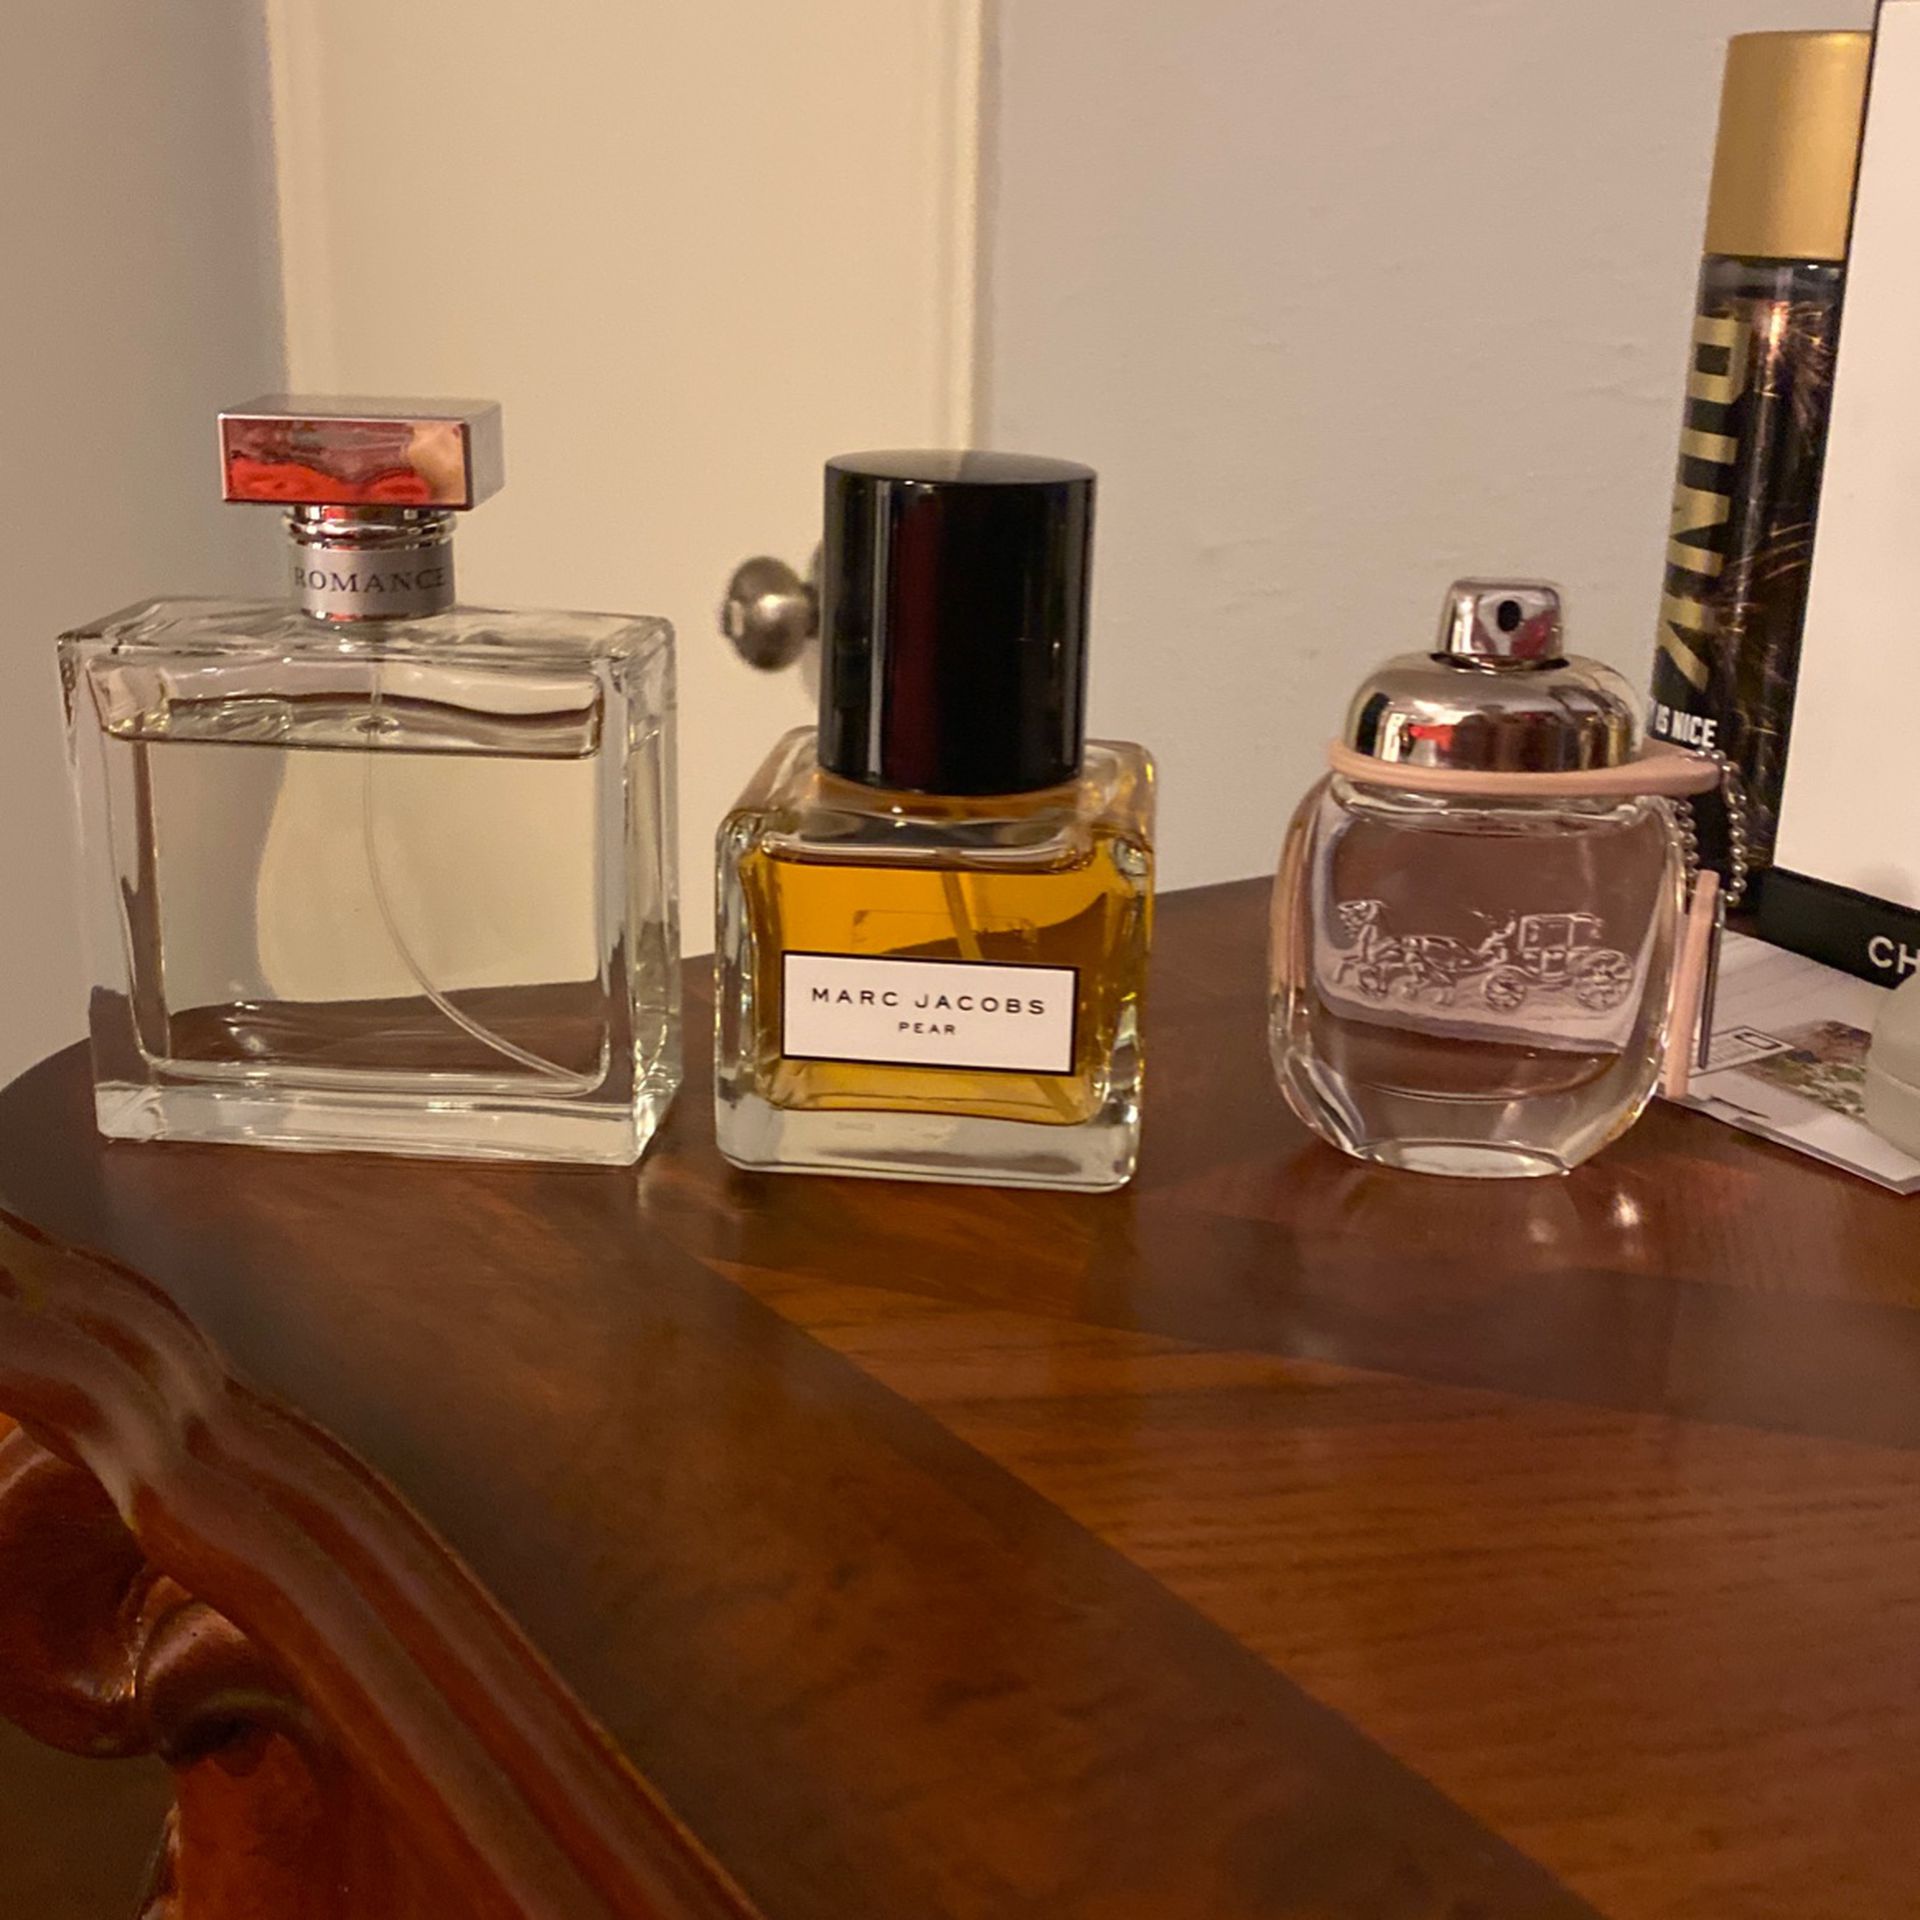 Bundle Of Perfumes 45.00 For Al Three